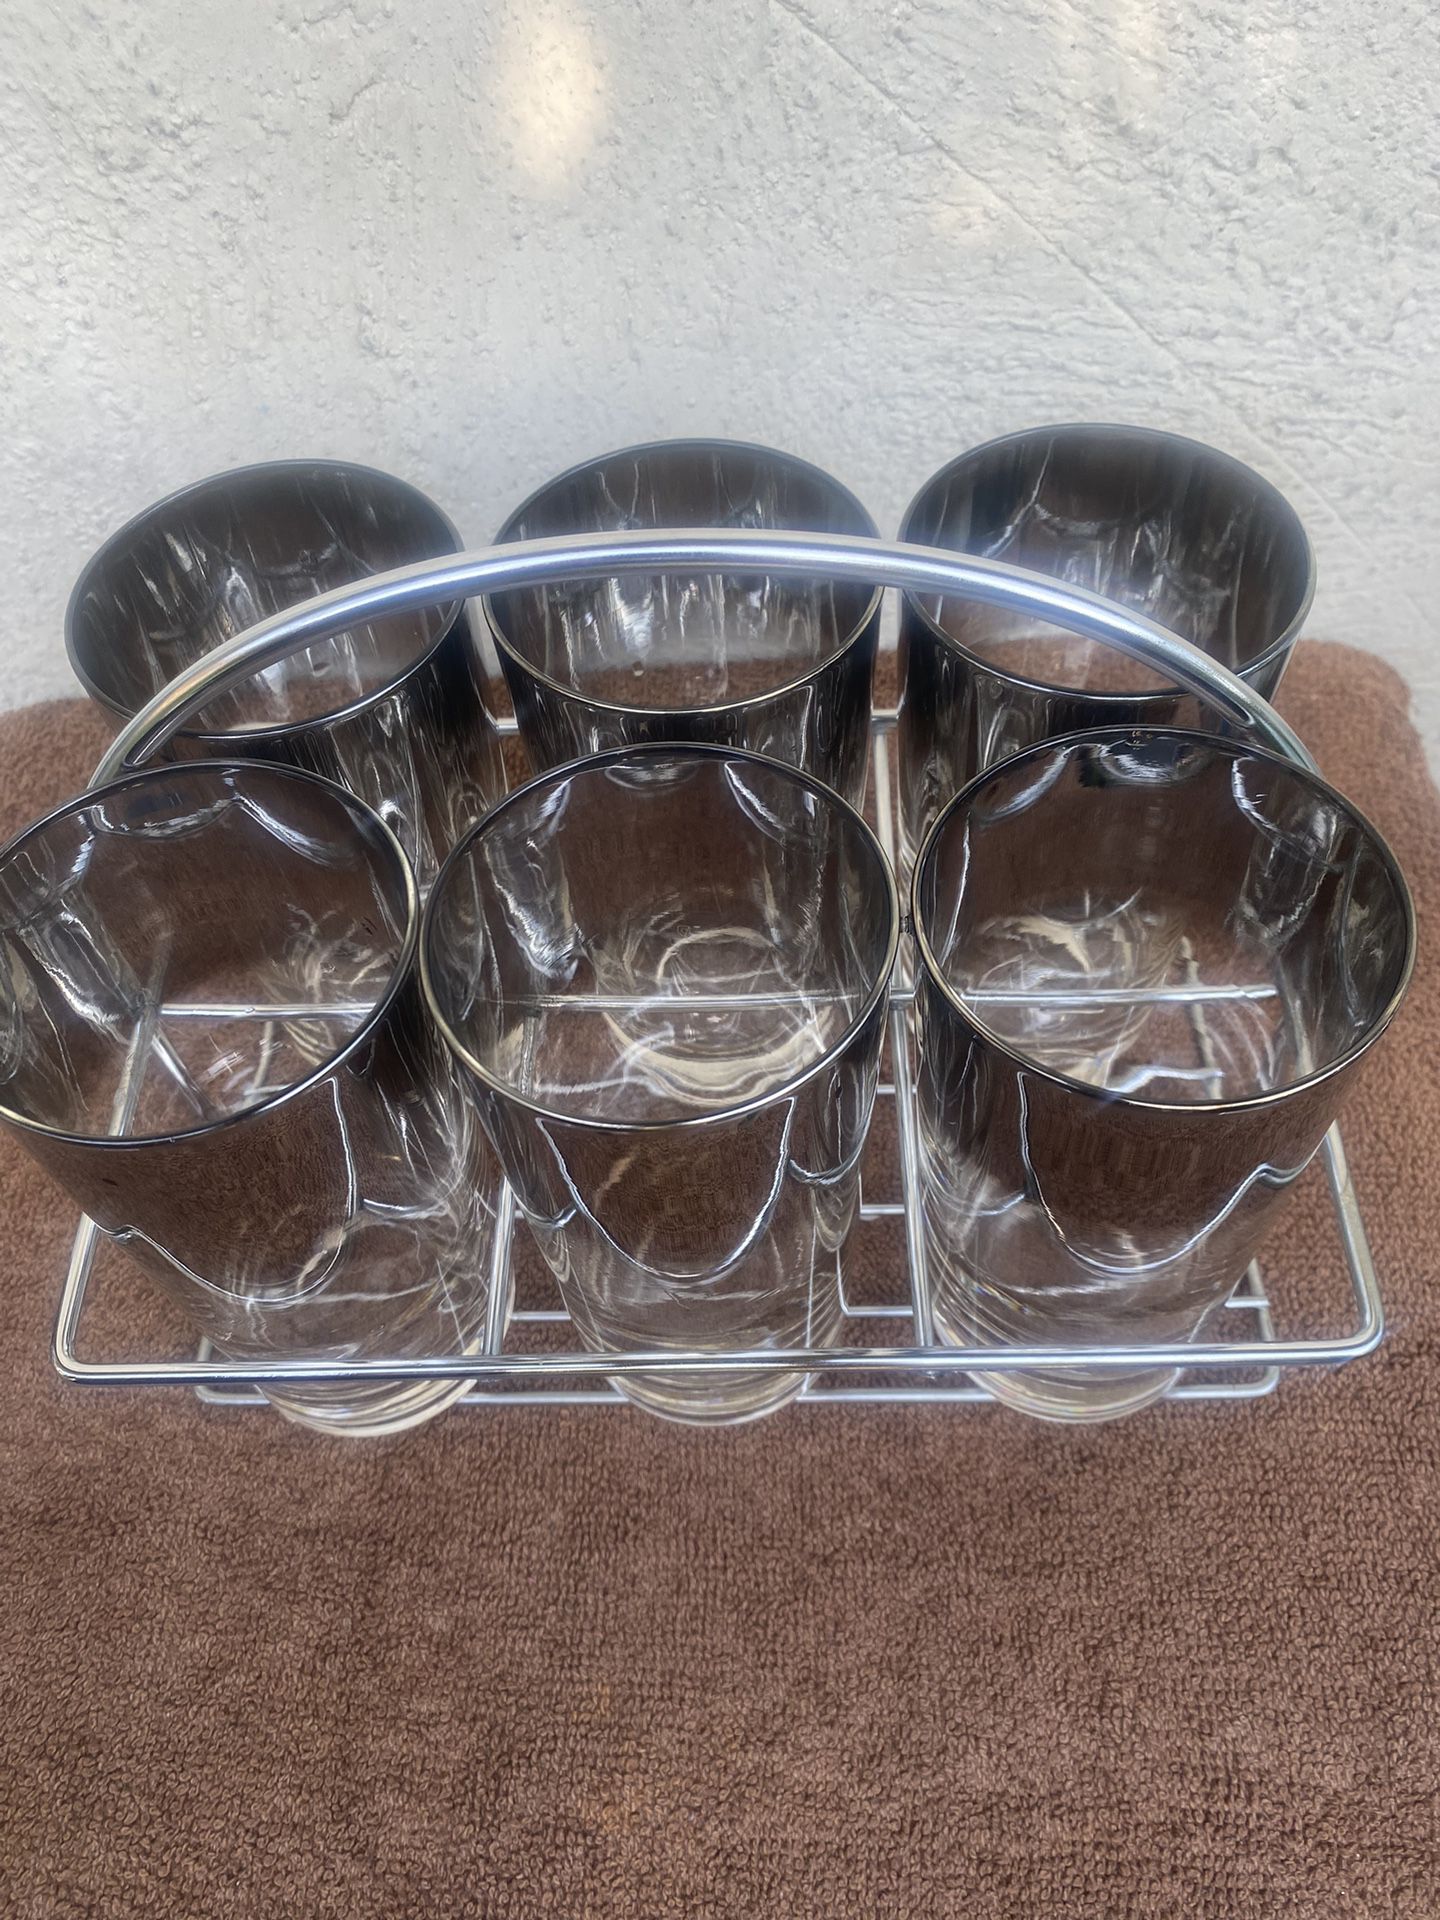 Vintage Dorothy Thorpe Silver Fade Rim Tumbler  Glasses In Original Chrome Caddy Tray